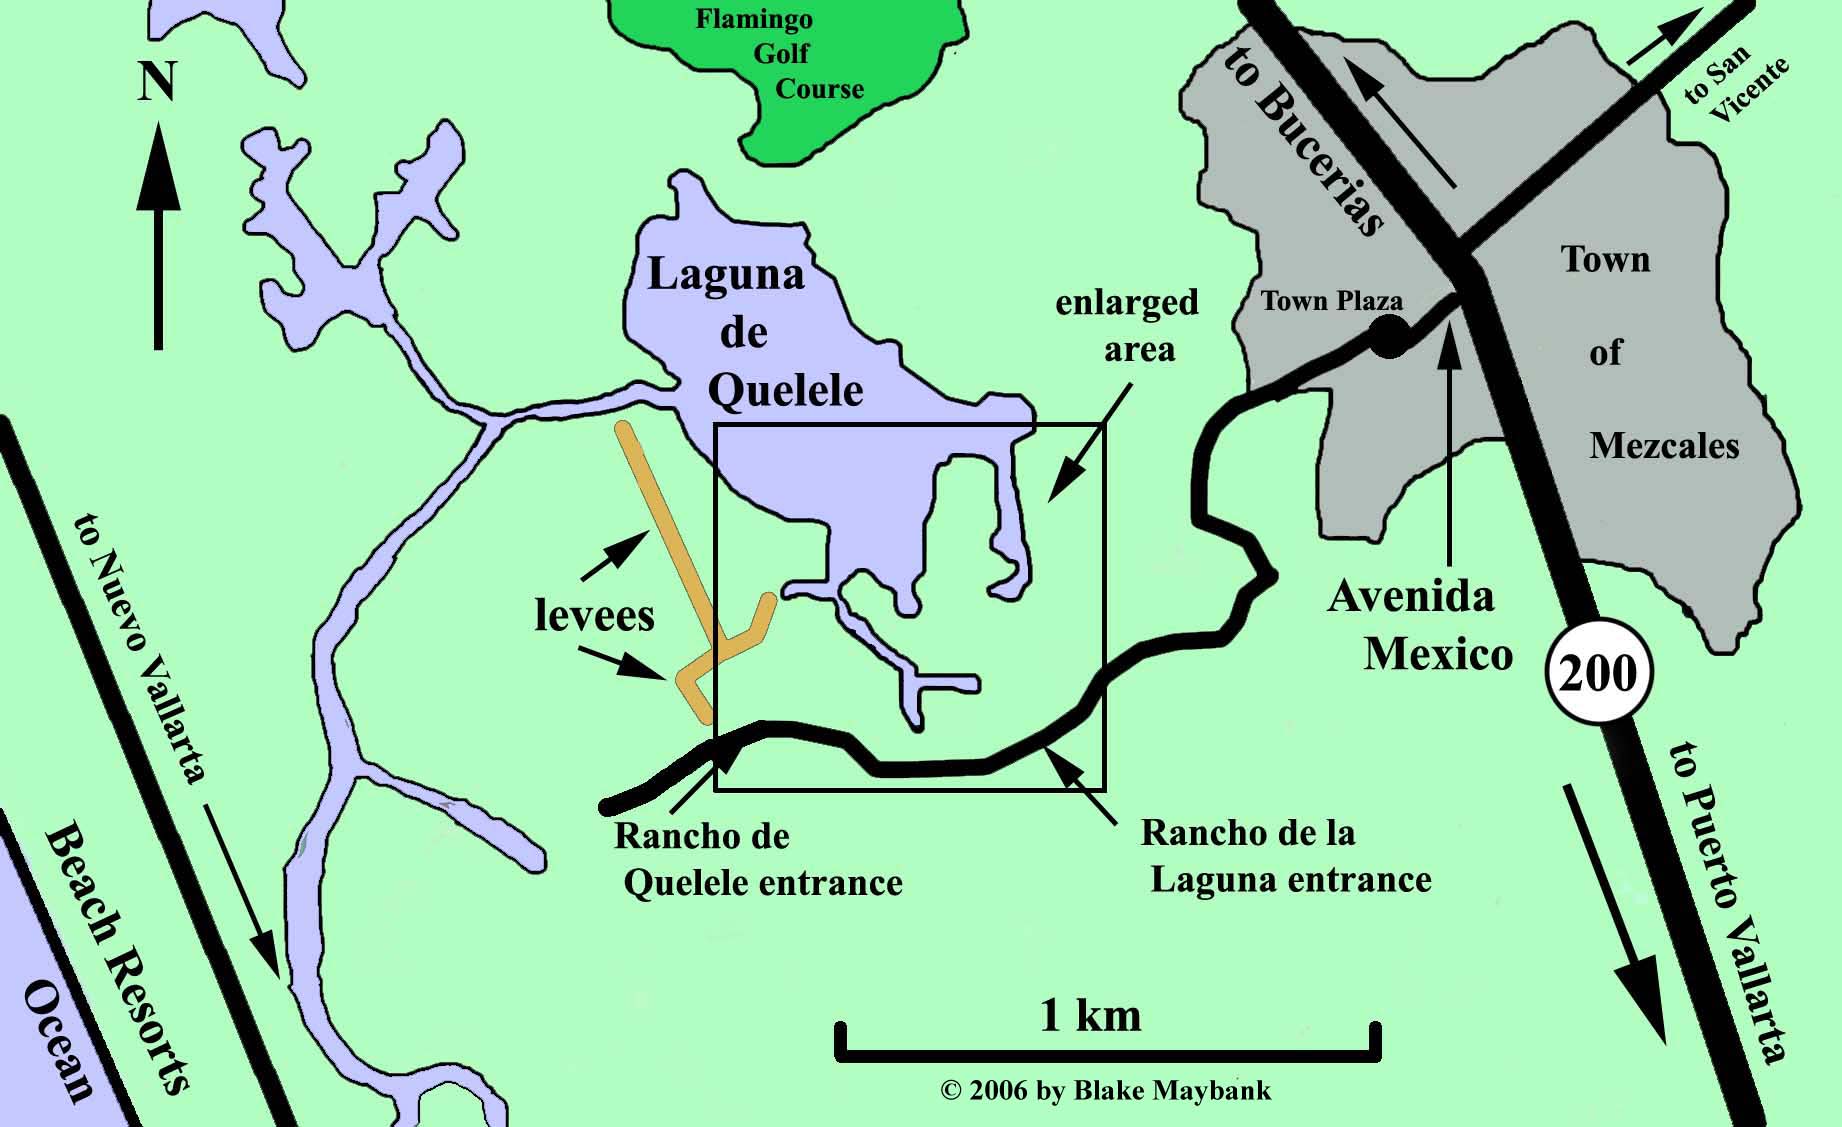 Map of Laguan de Quelele region